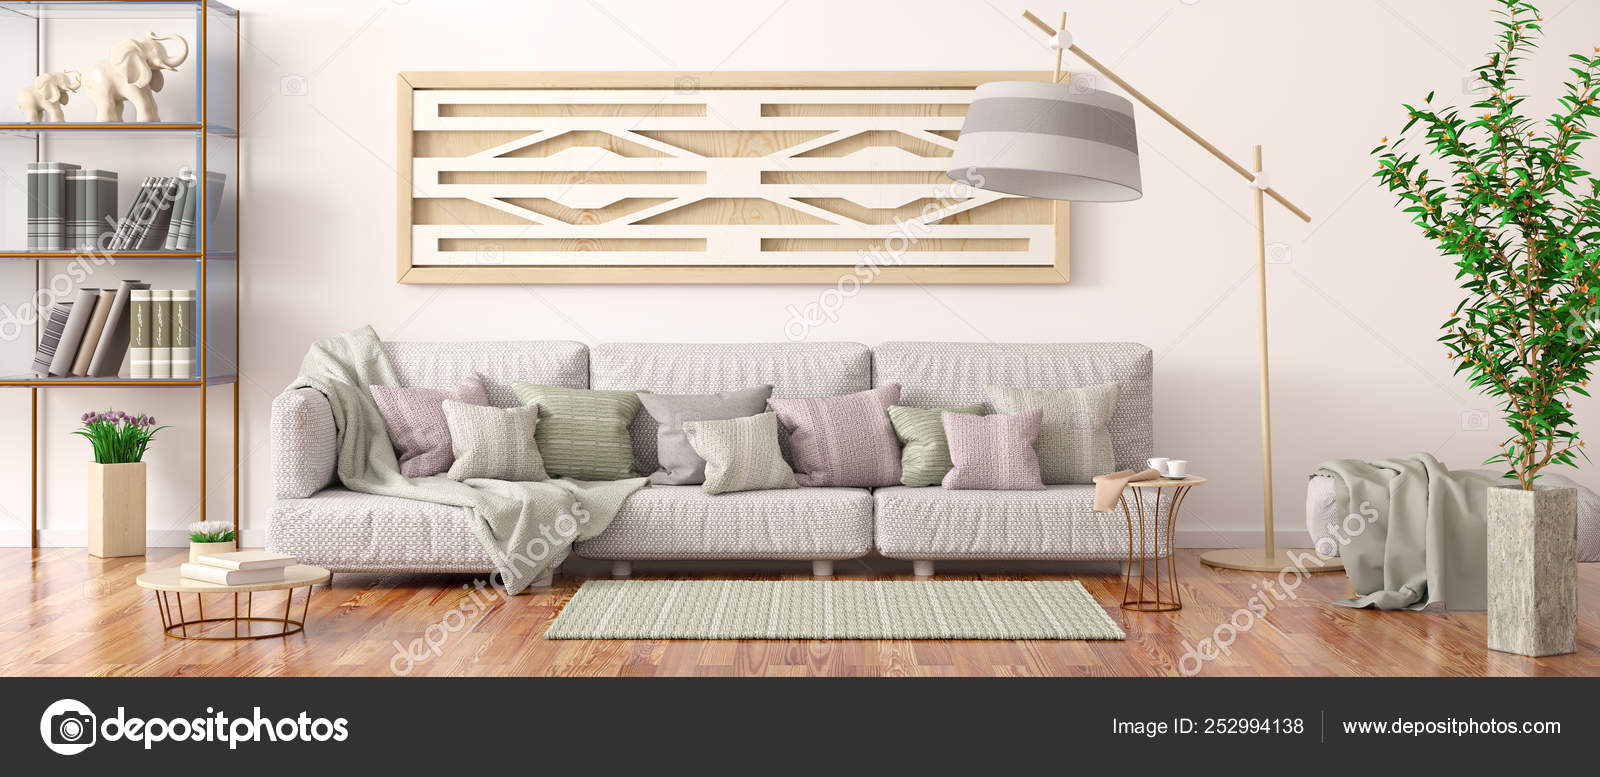 Interior Design Of Modern Living Room With Gray Sofa